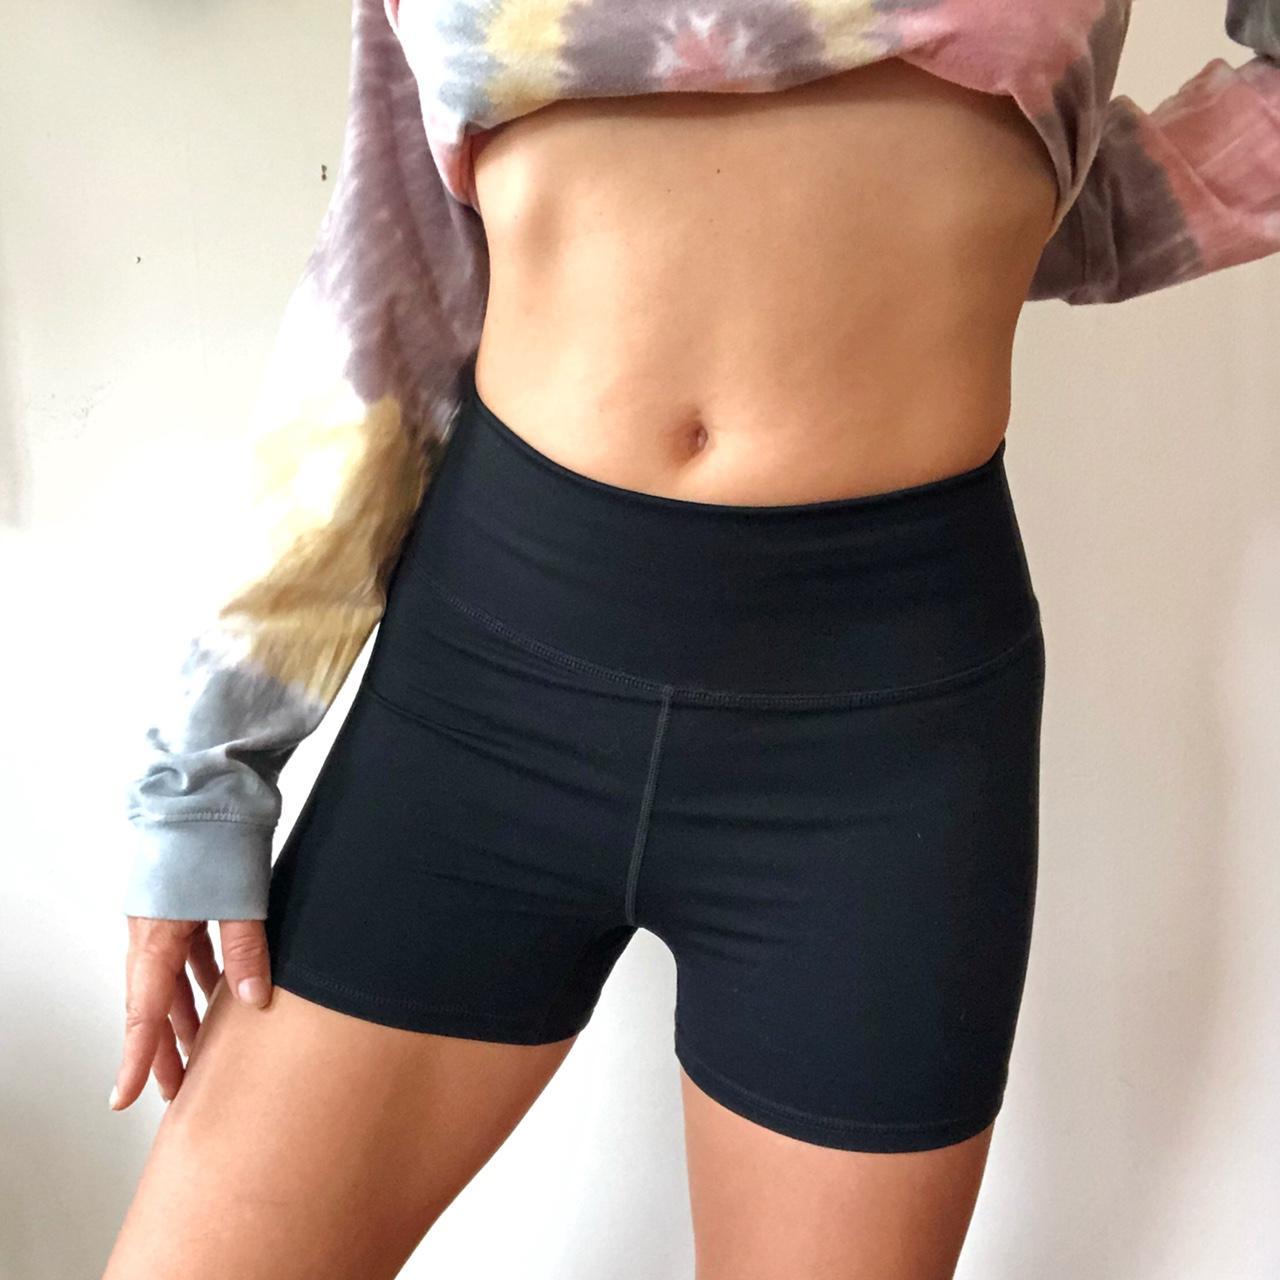 Skatie Bobbi Thick bikini bottom size medium; model - Depop